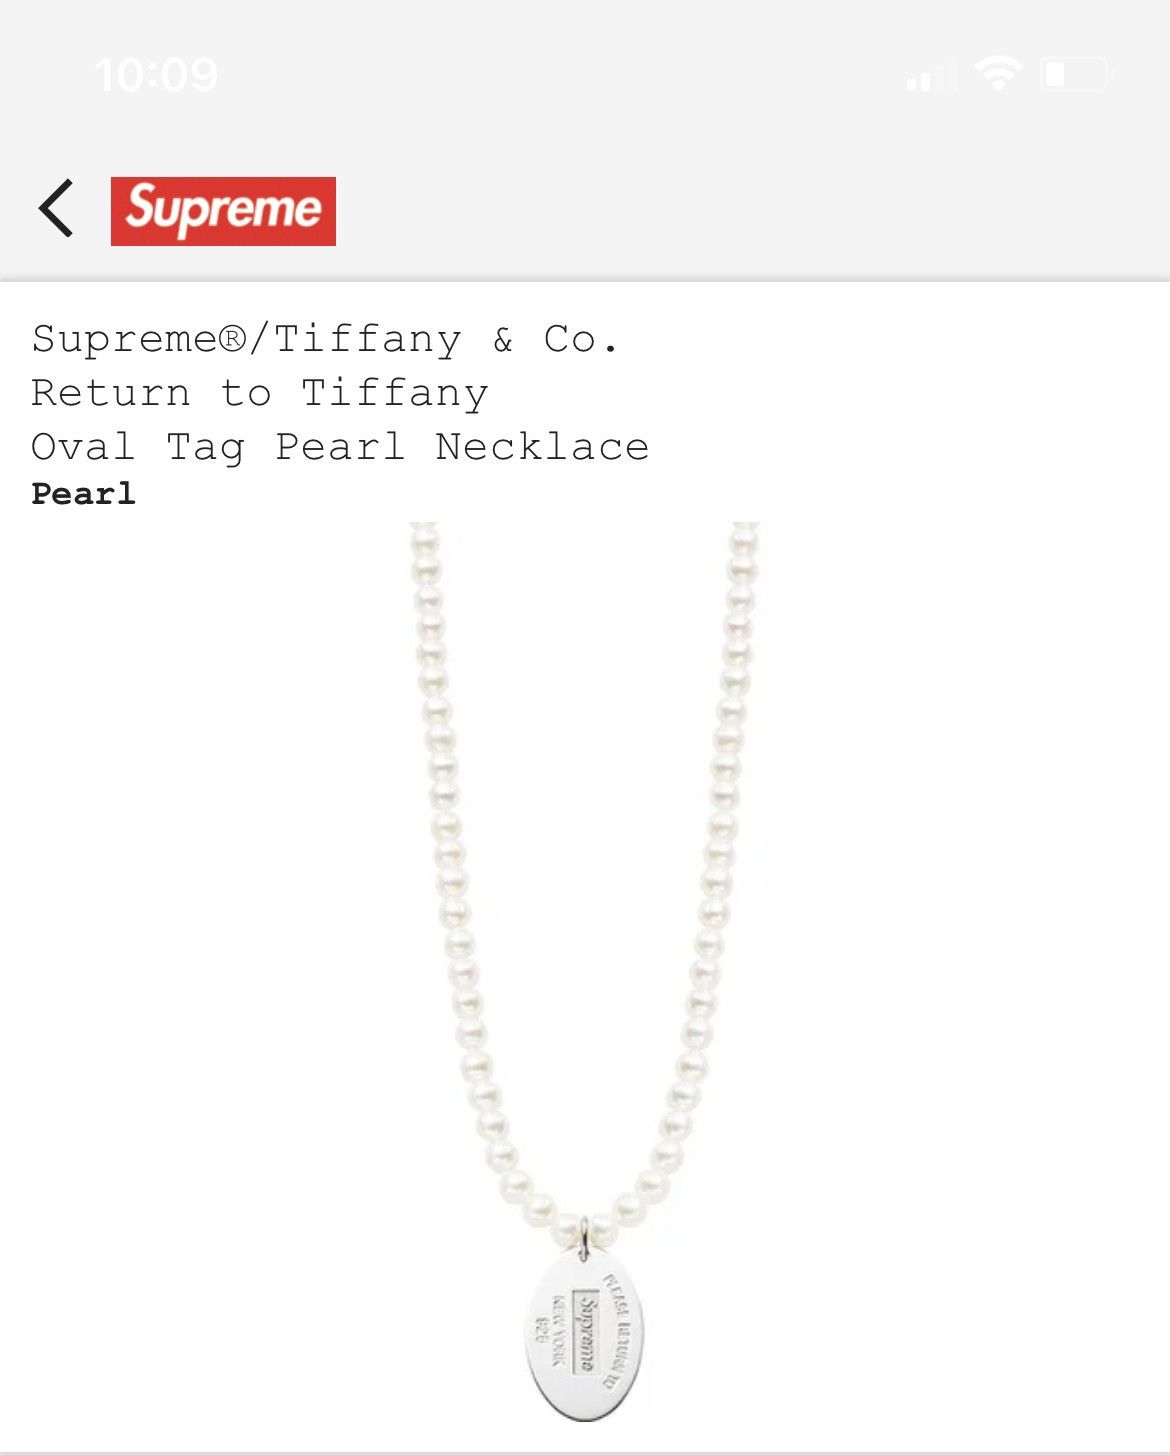 Supreme Supreme Tiffany&Co Return to Tiffany Oval Tag Pearl